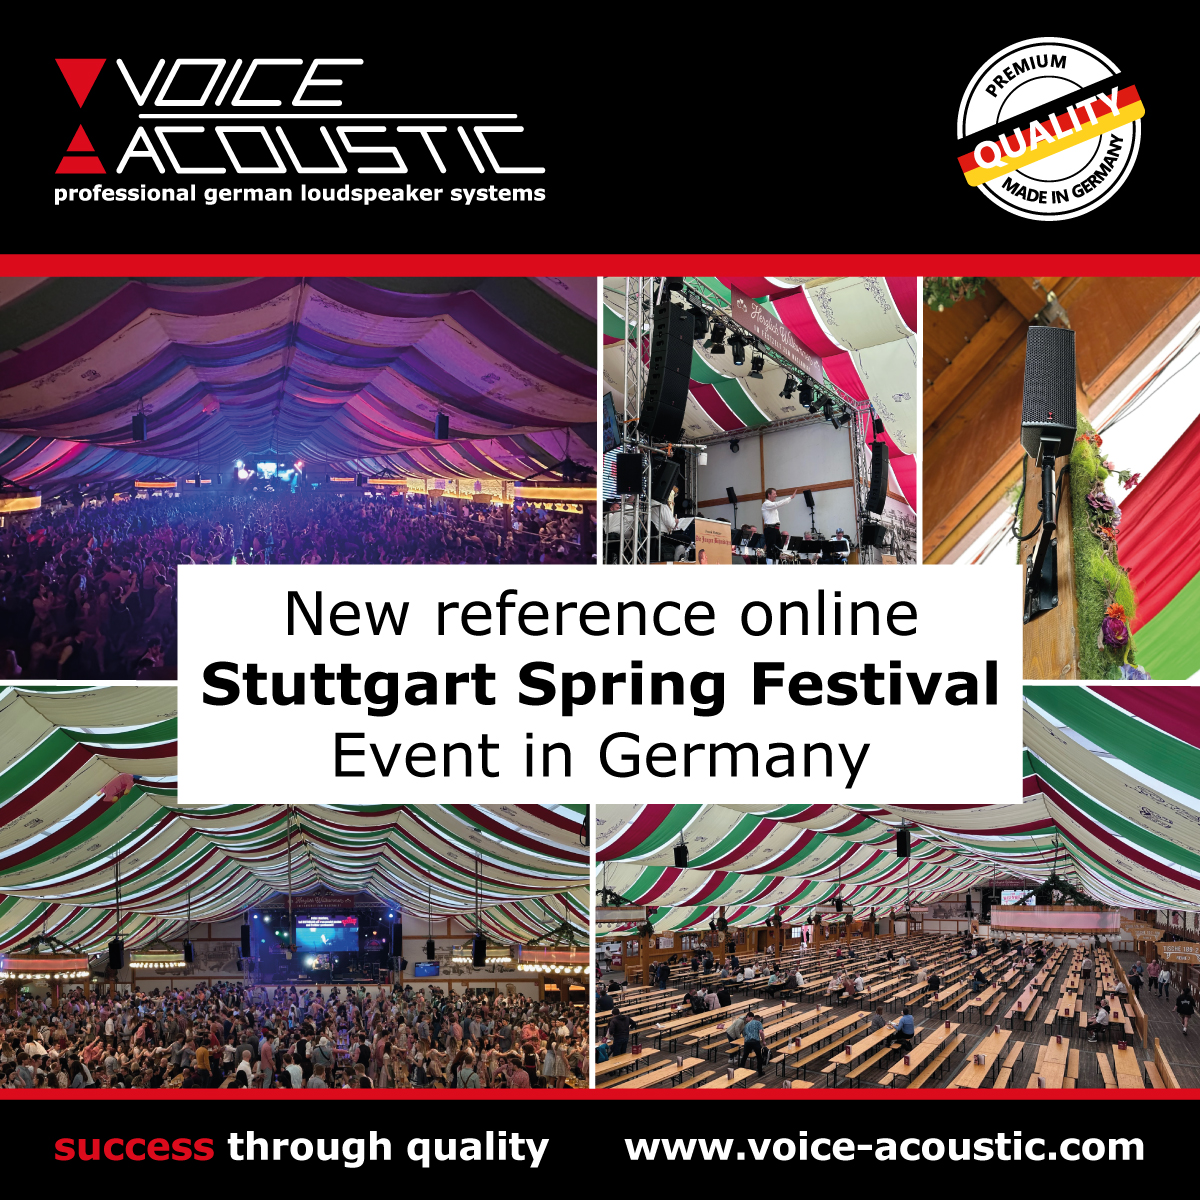 Voice-Acoustic loudspeakers at the Stuttgart Spring Festival